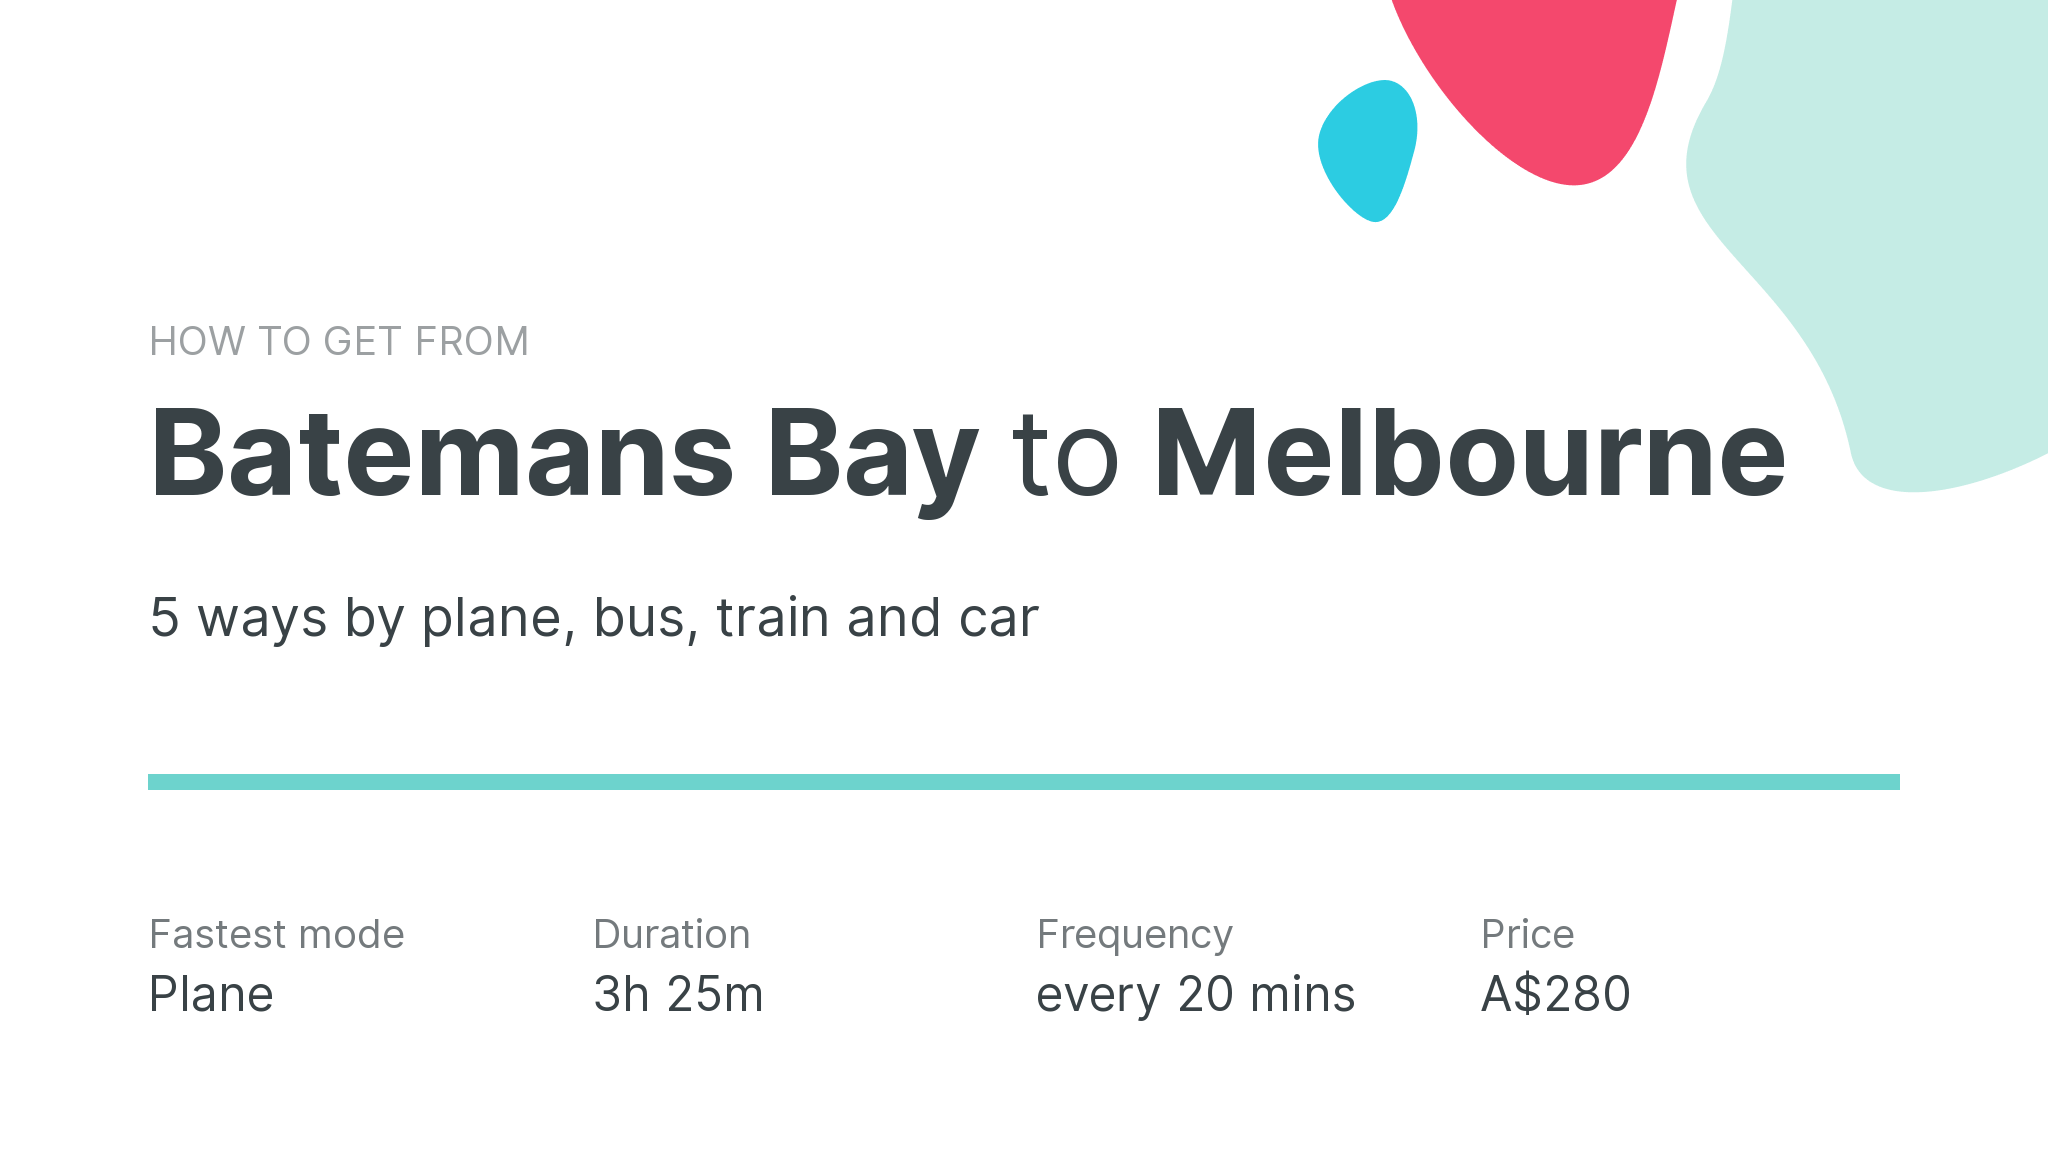 How do I get from Batemans Bay to Melbourne